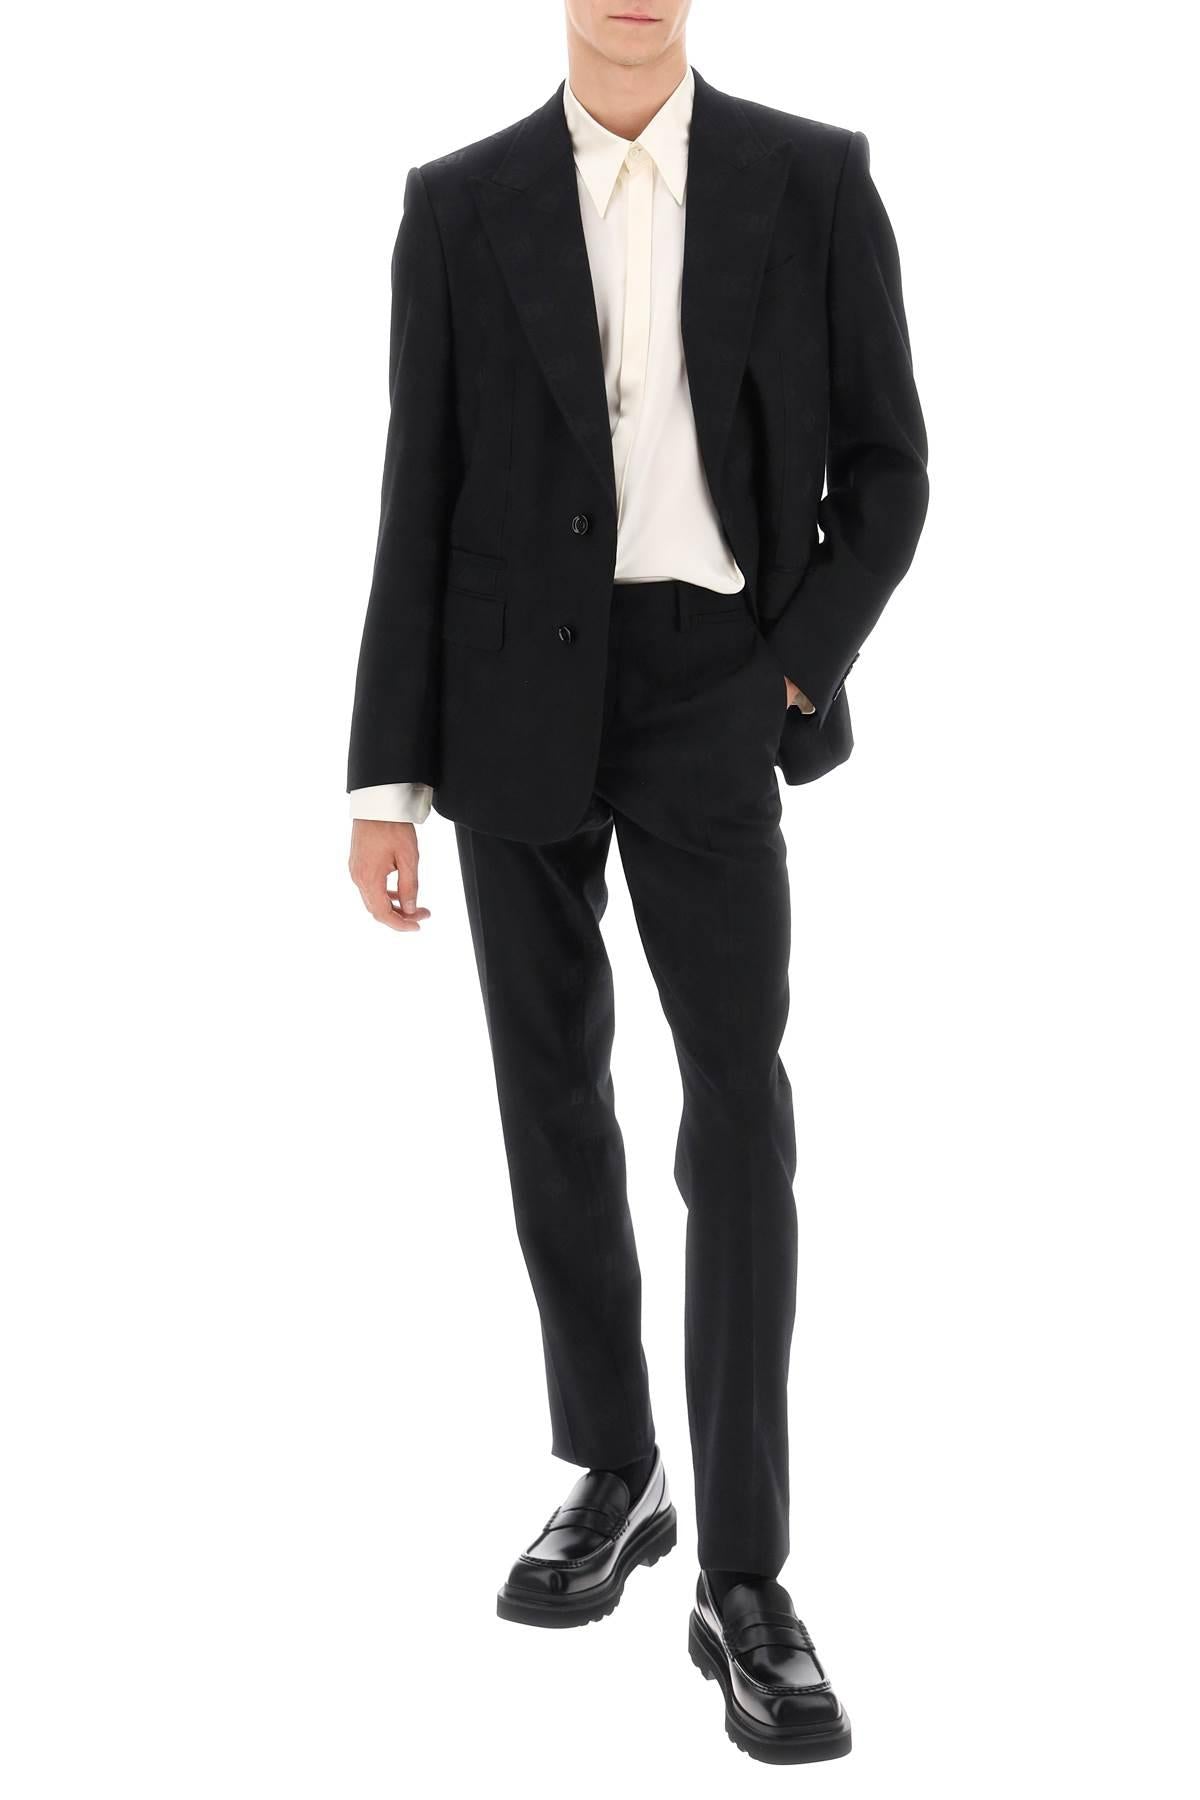 Dolce & Gabbana Sicilia Single Breasted Monogram Jacket in Black for Men